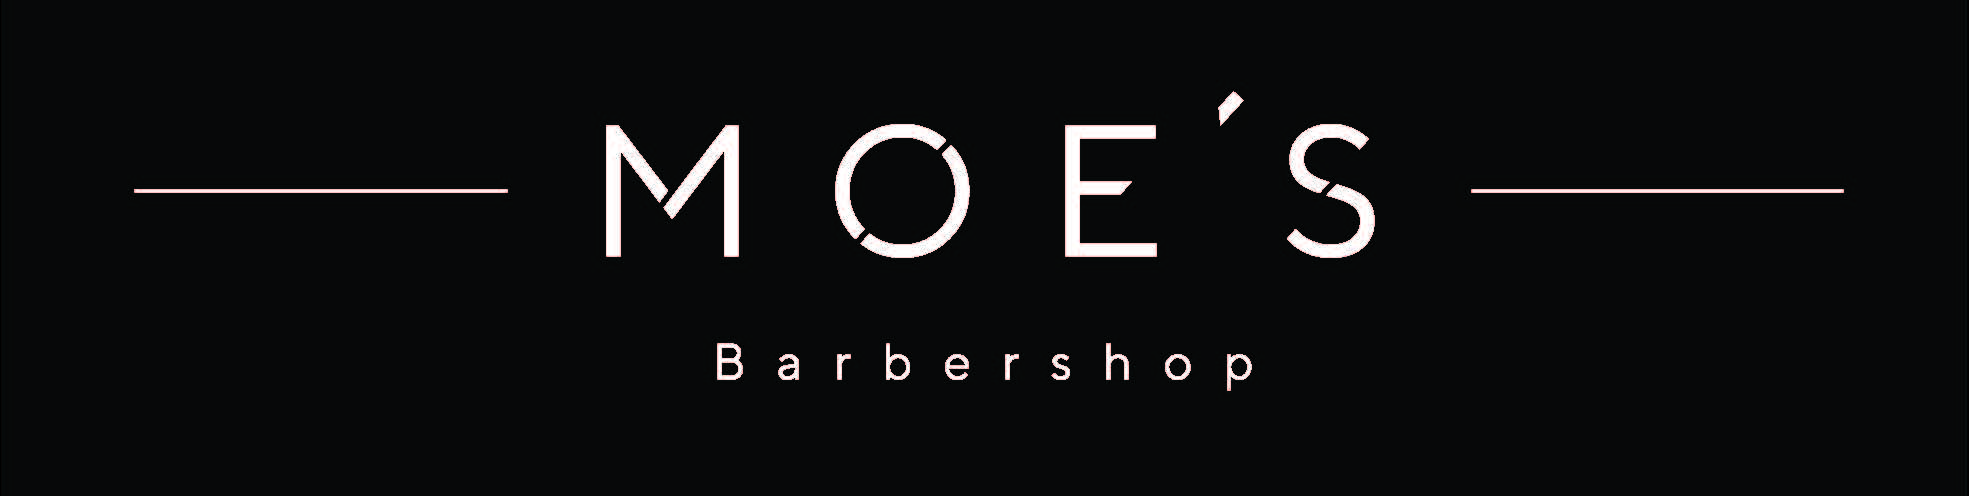 Moe's Barber Shop